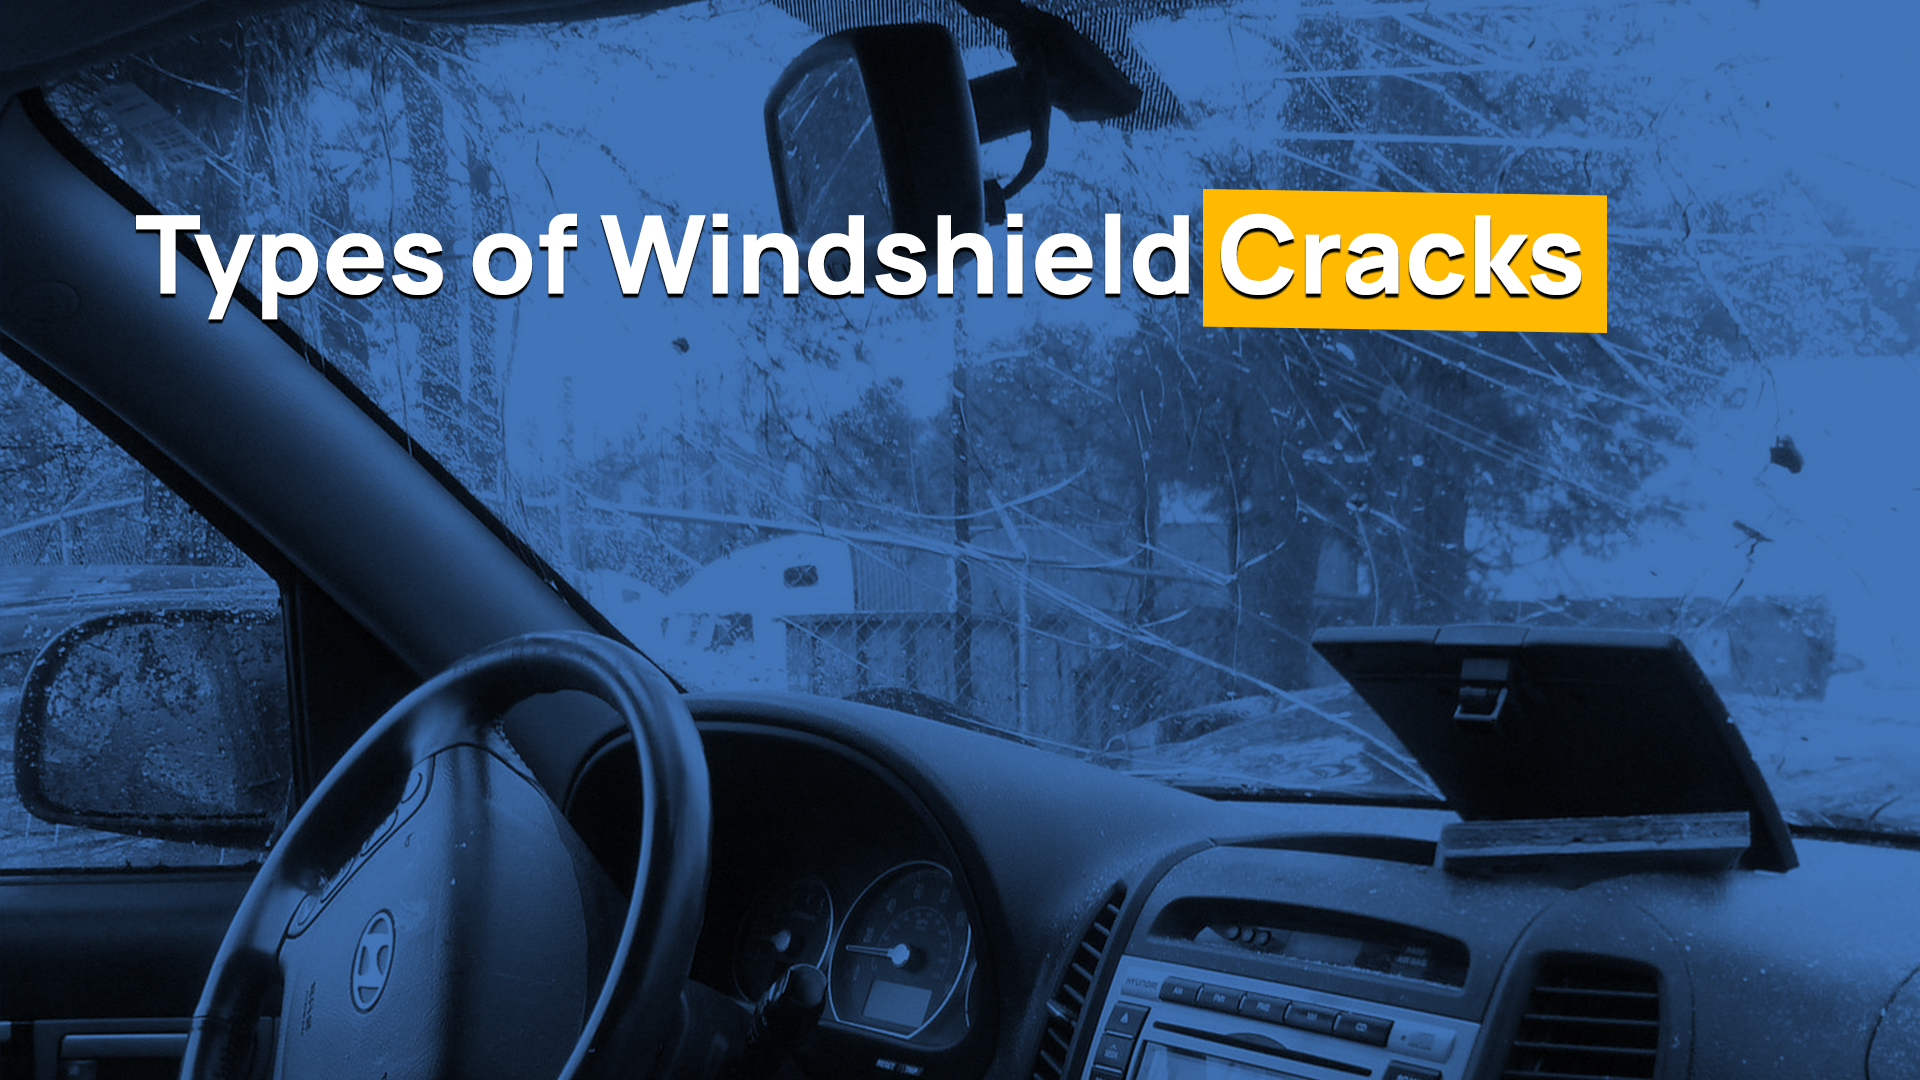 Types of windshield cracks